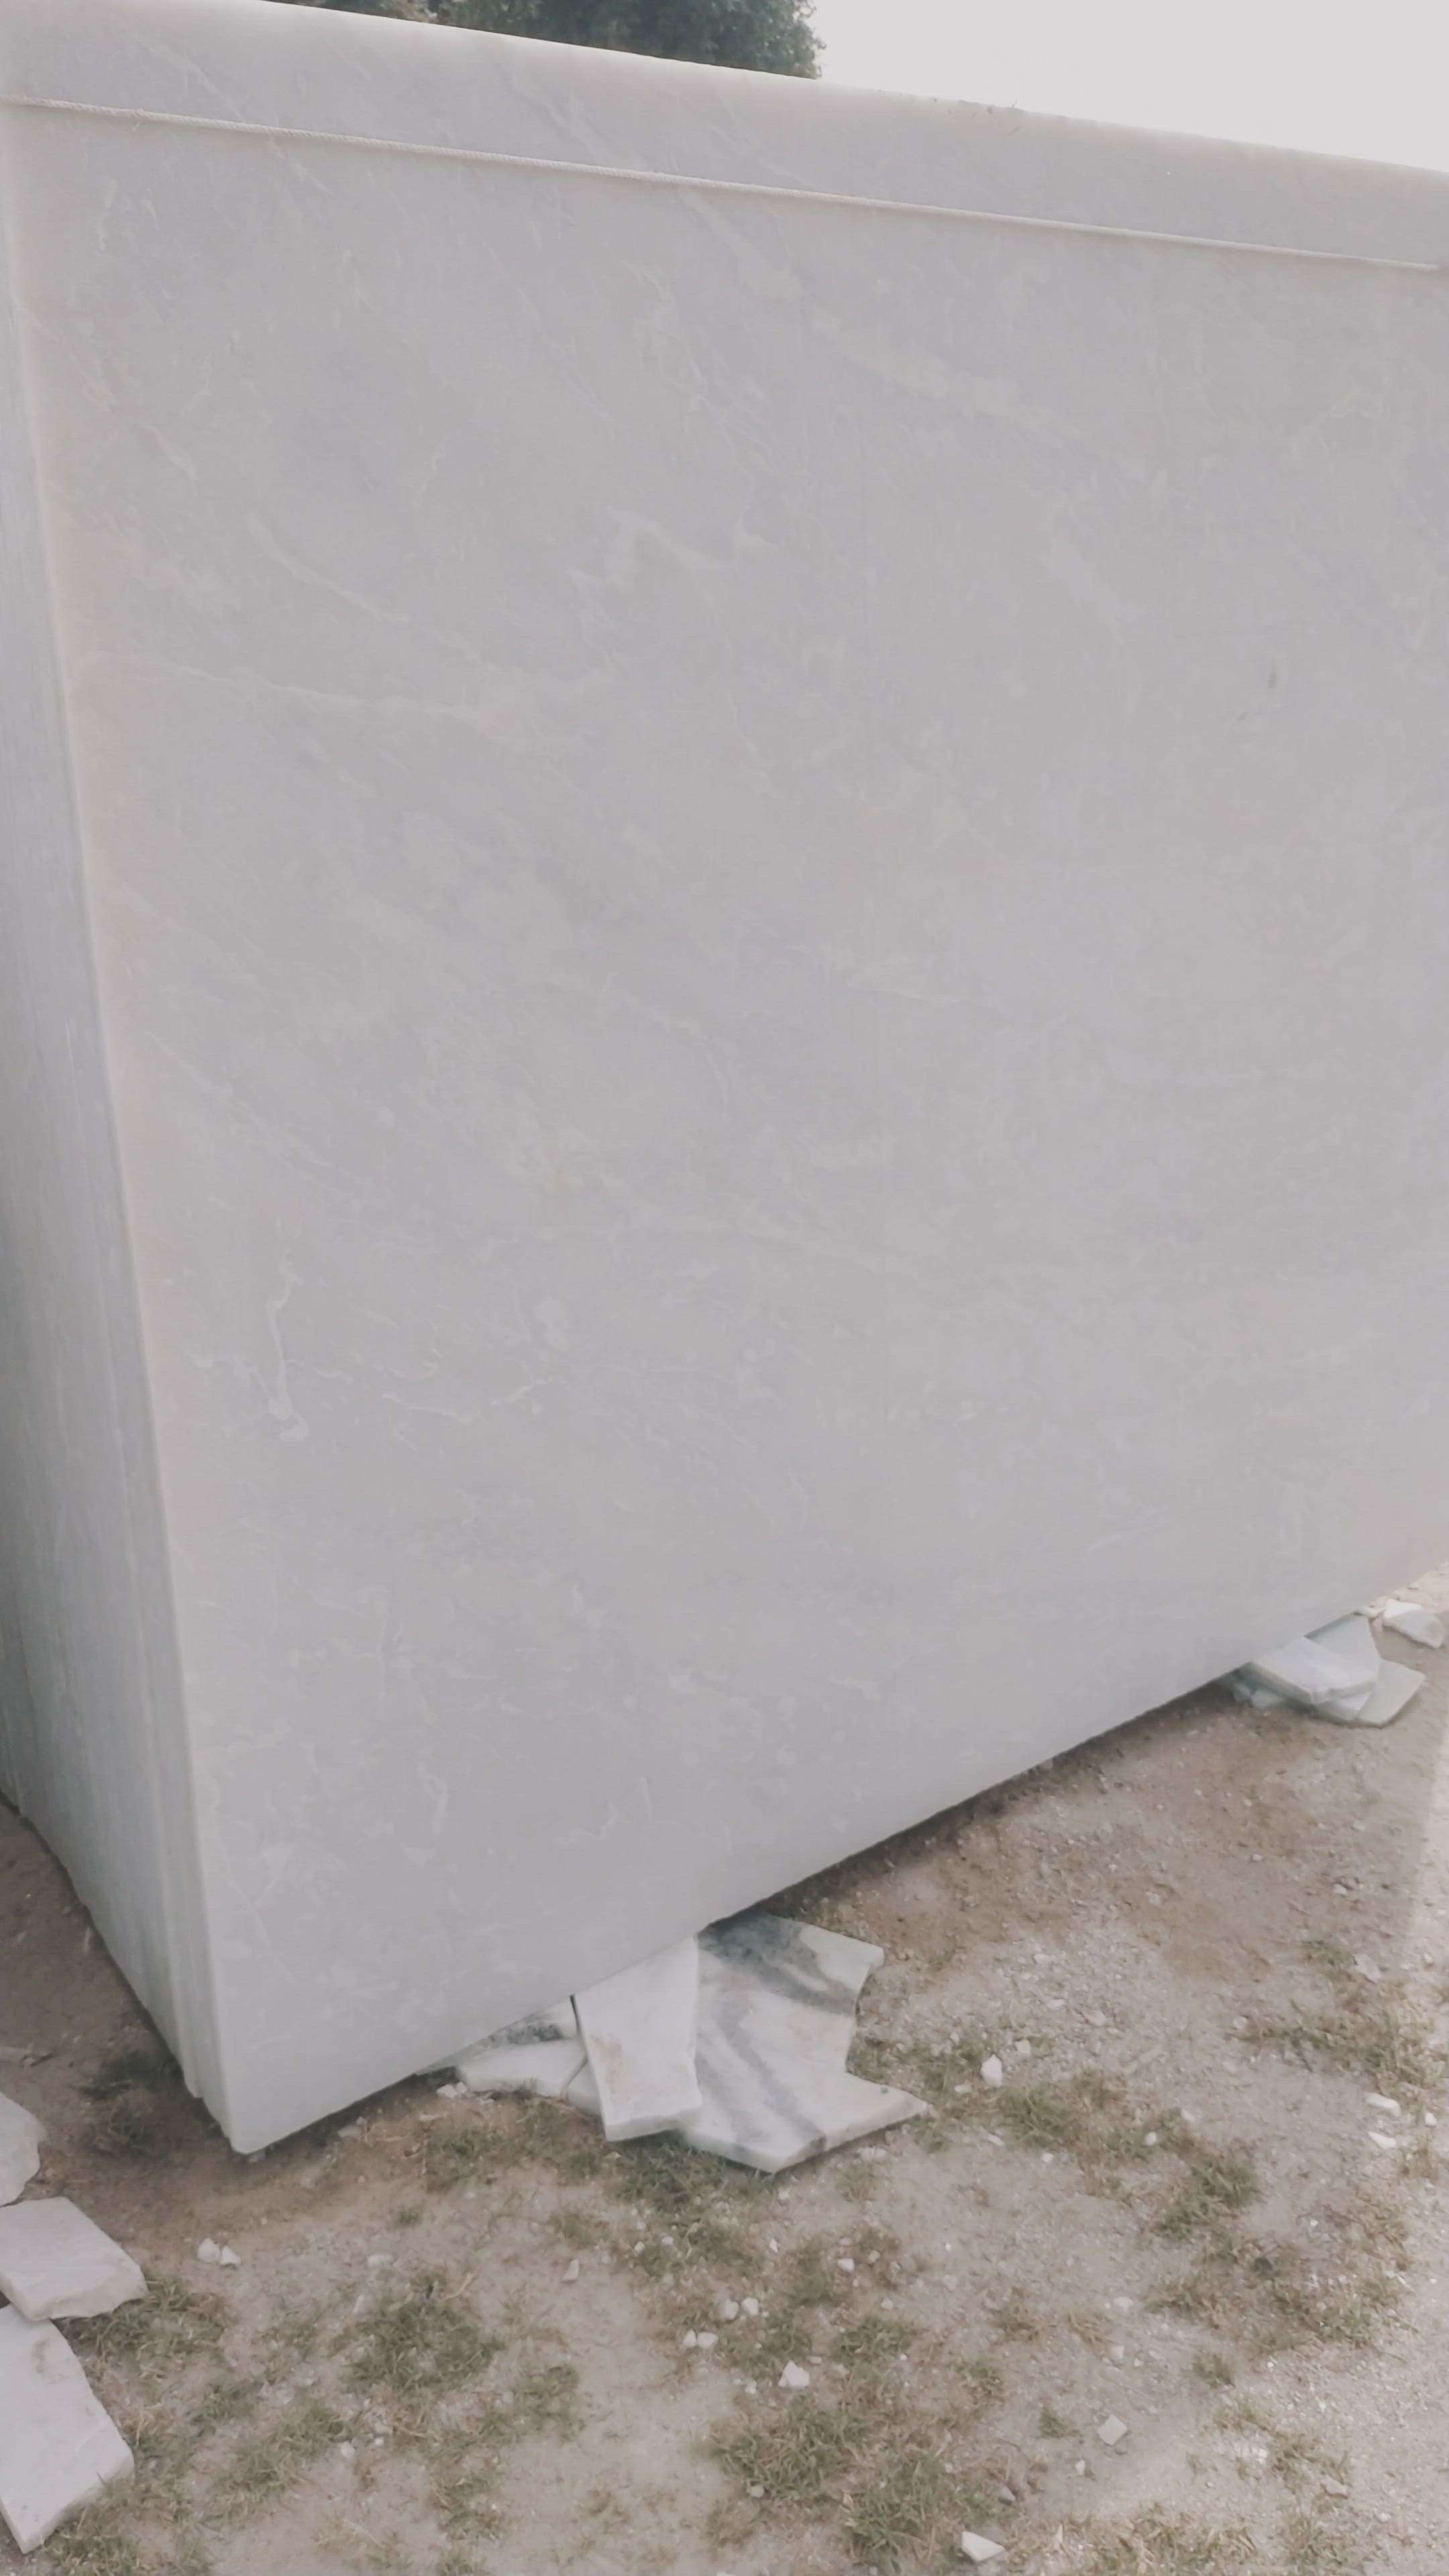 ✨ Premium MORWARD White Marble ✨

⚡more details:
WhatsApp: +91 96563 11151
YouTube link: https://www.youtube.com/@sswhitemarblesllp8205

Instagram: https://instagram.com/crossbowdevelopers?utm_source=qr&igshid=OGU0MmVlOWVjOQ%3D%3D

 #morwad #premiumquality  #whitemarble  #FlooringServices  #MarbleFlooring  #marbles